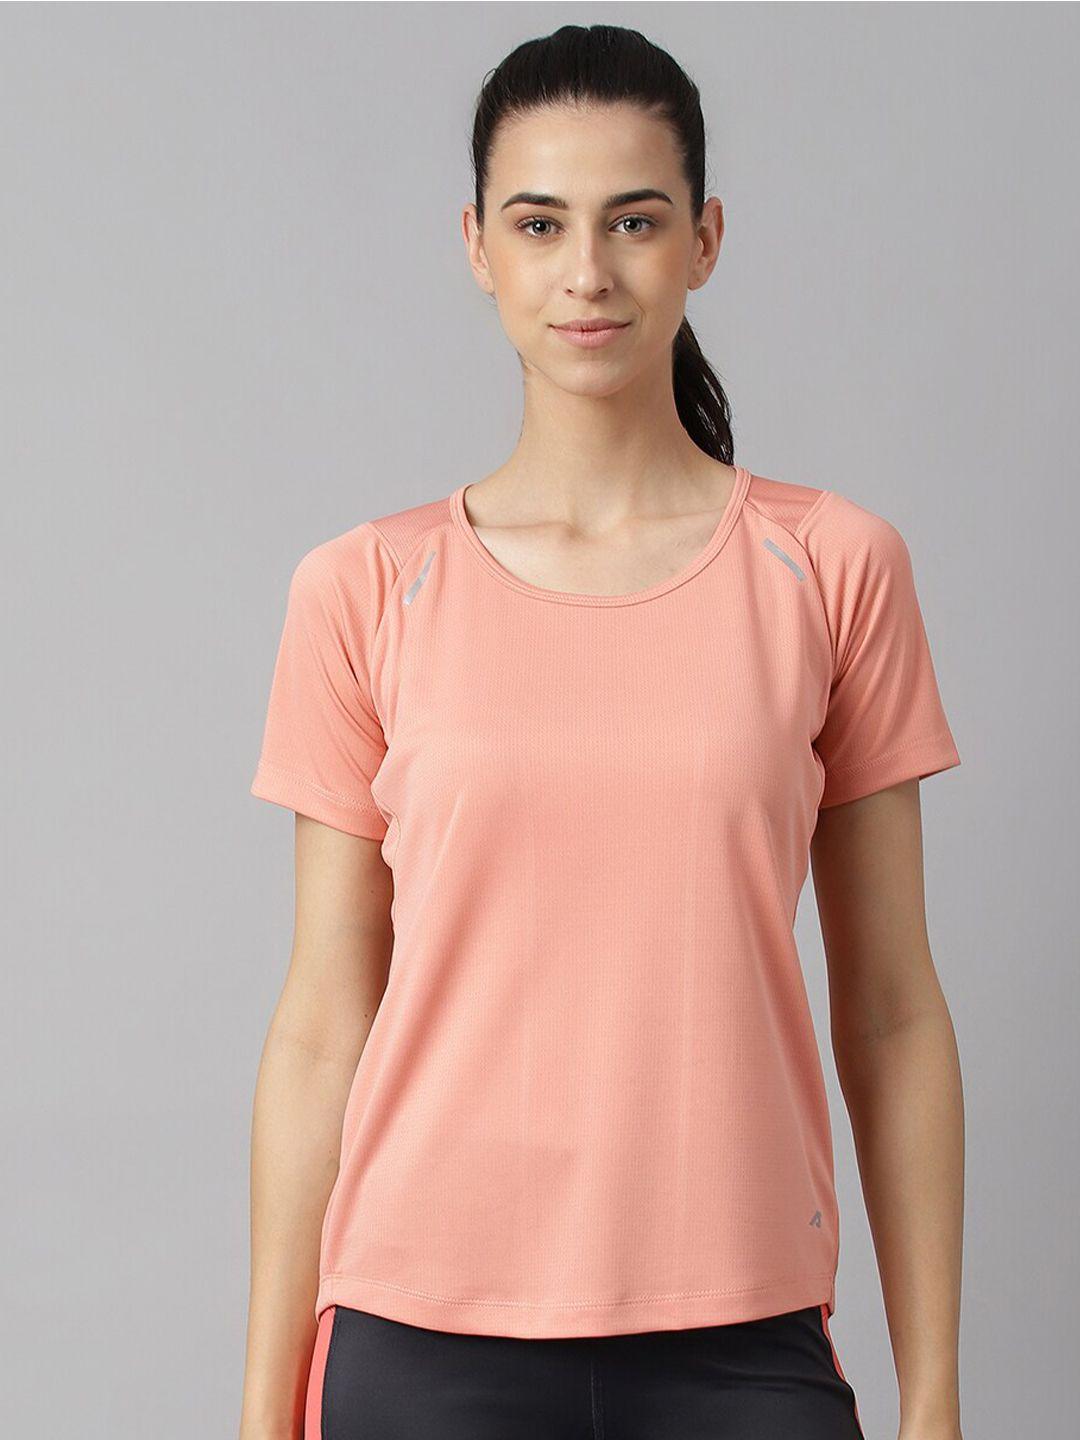 alcis women rosette anti-static slim-fit round neck sustainable pro-run training t-shirt